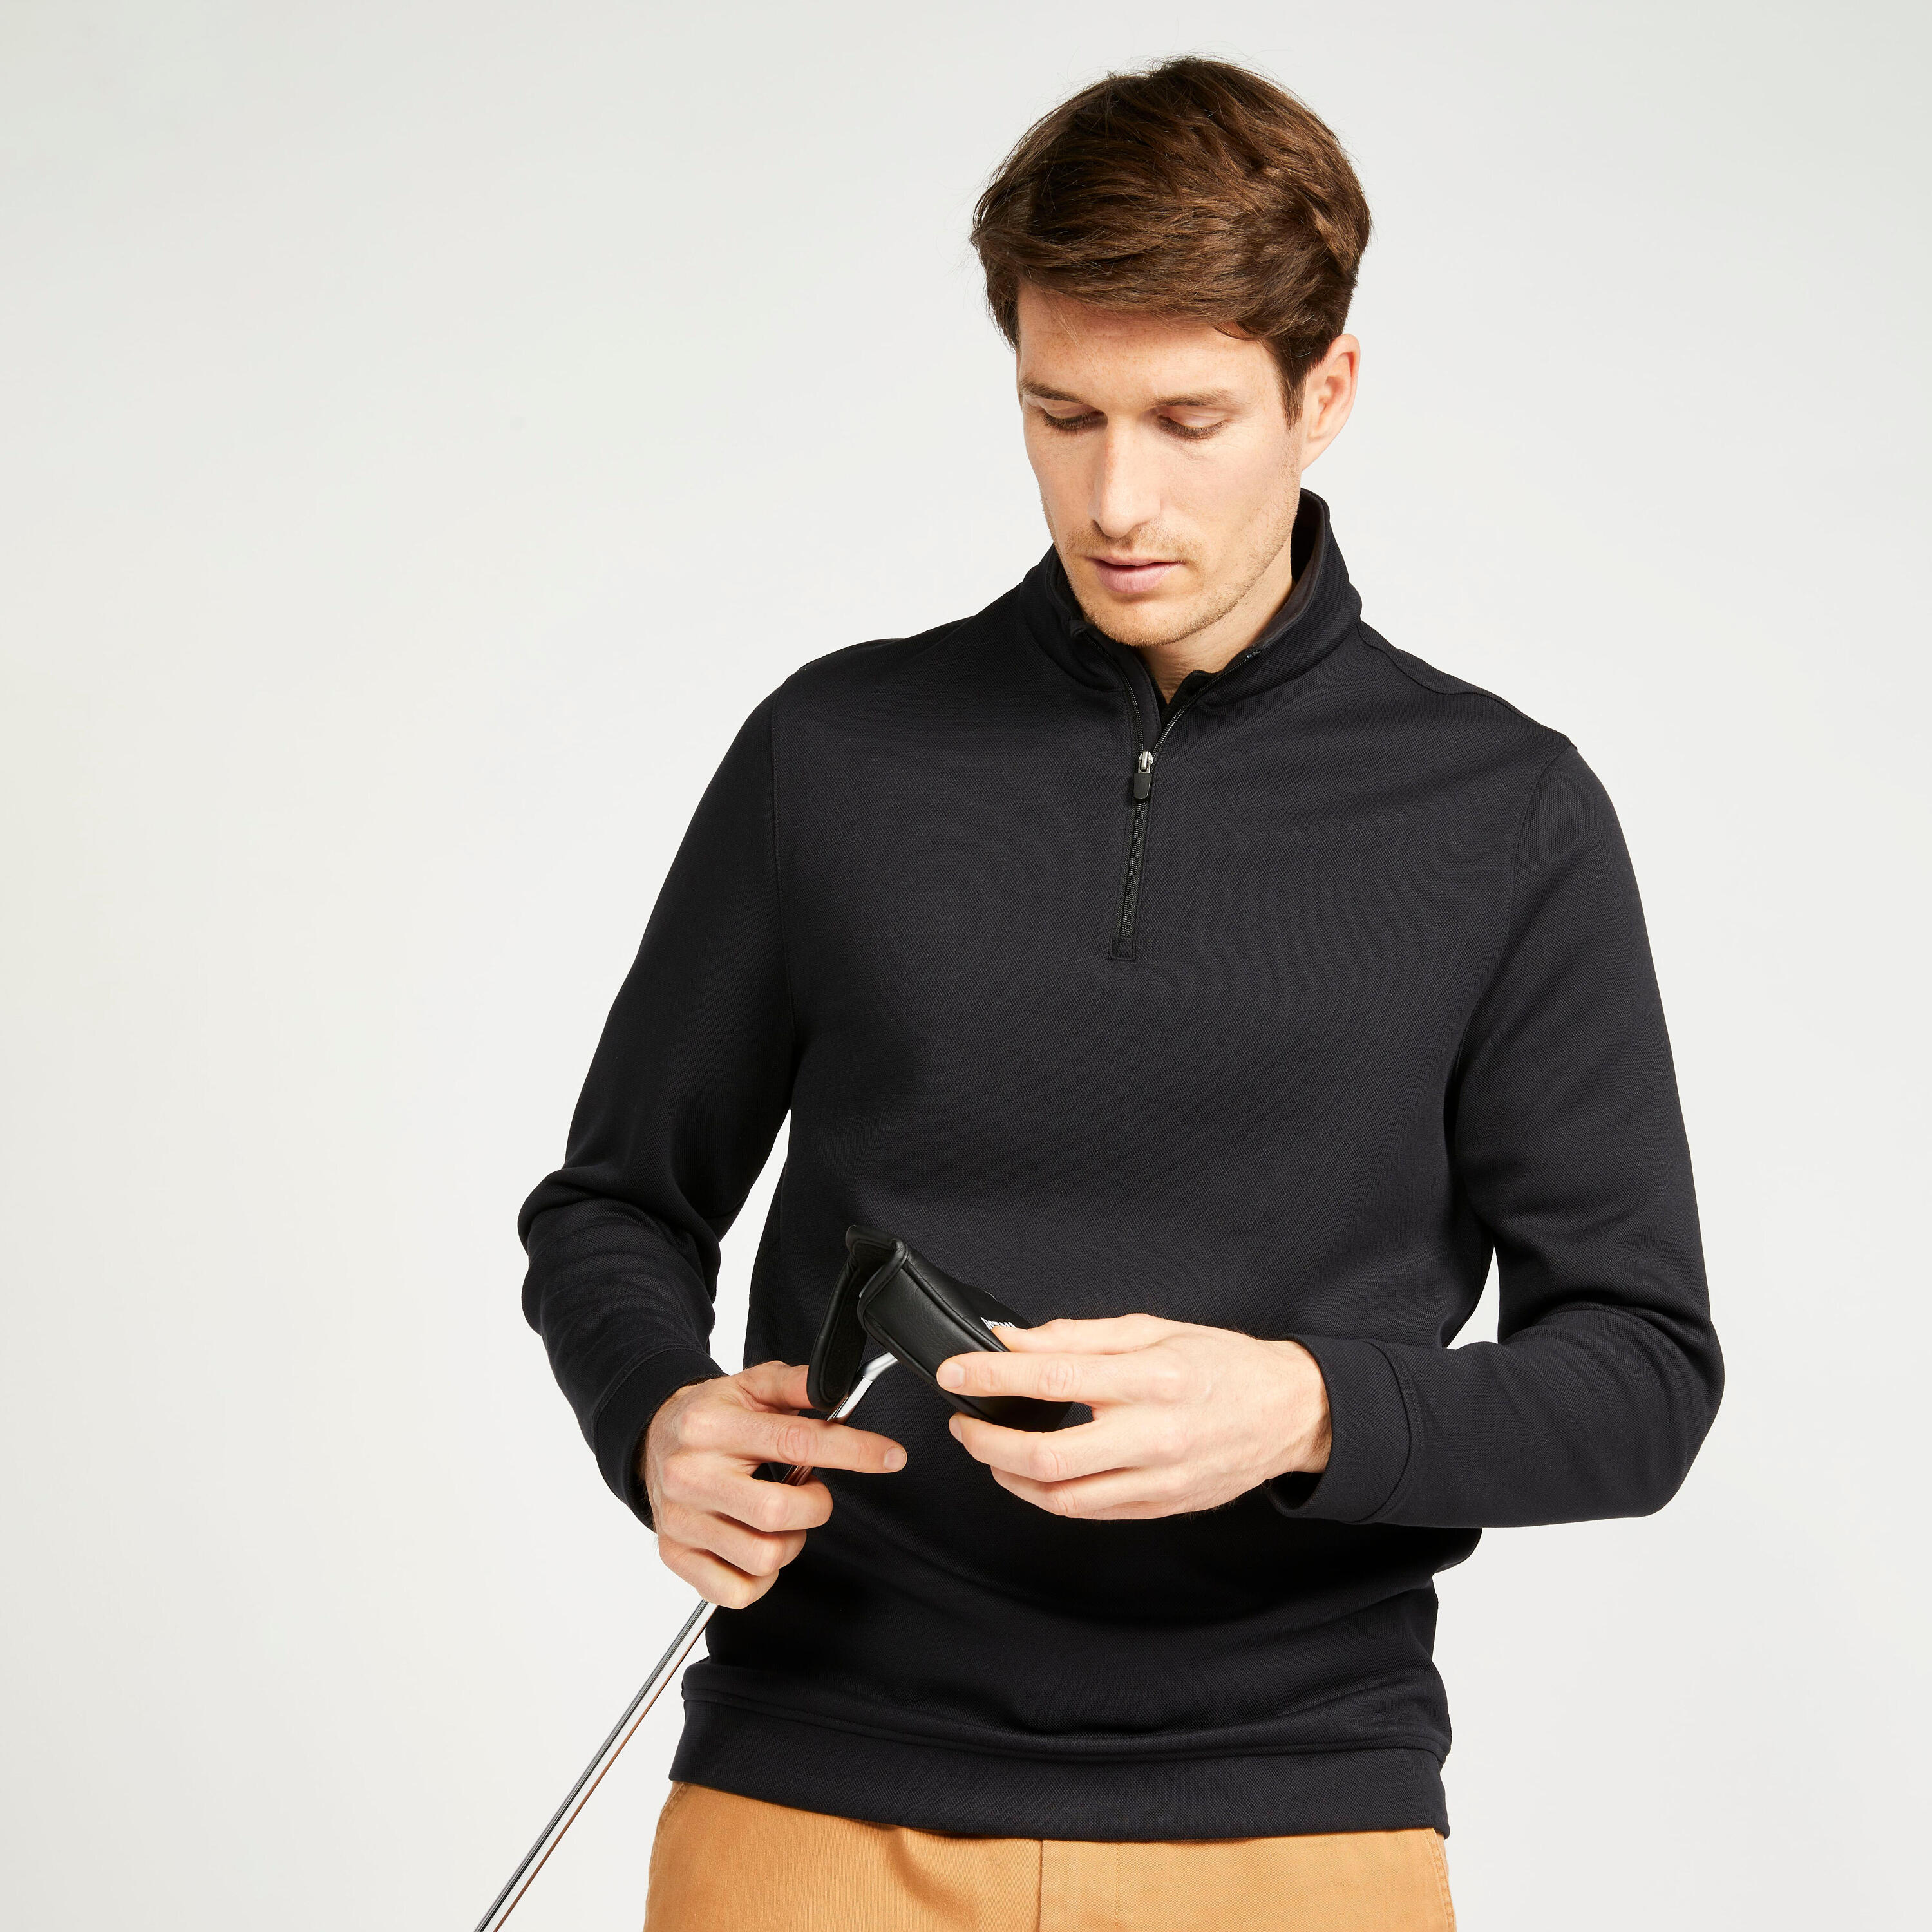 INESIS Men's Golf Sweatshirt - MW500 Black